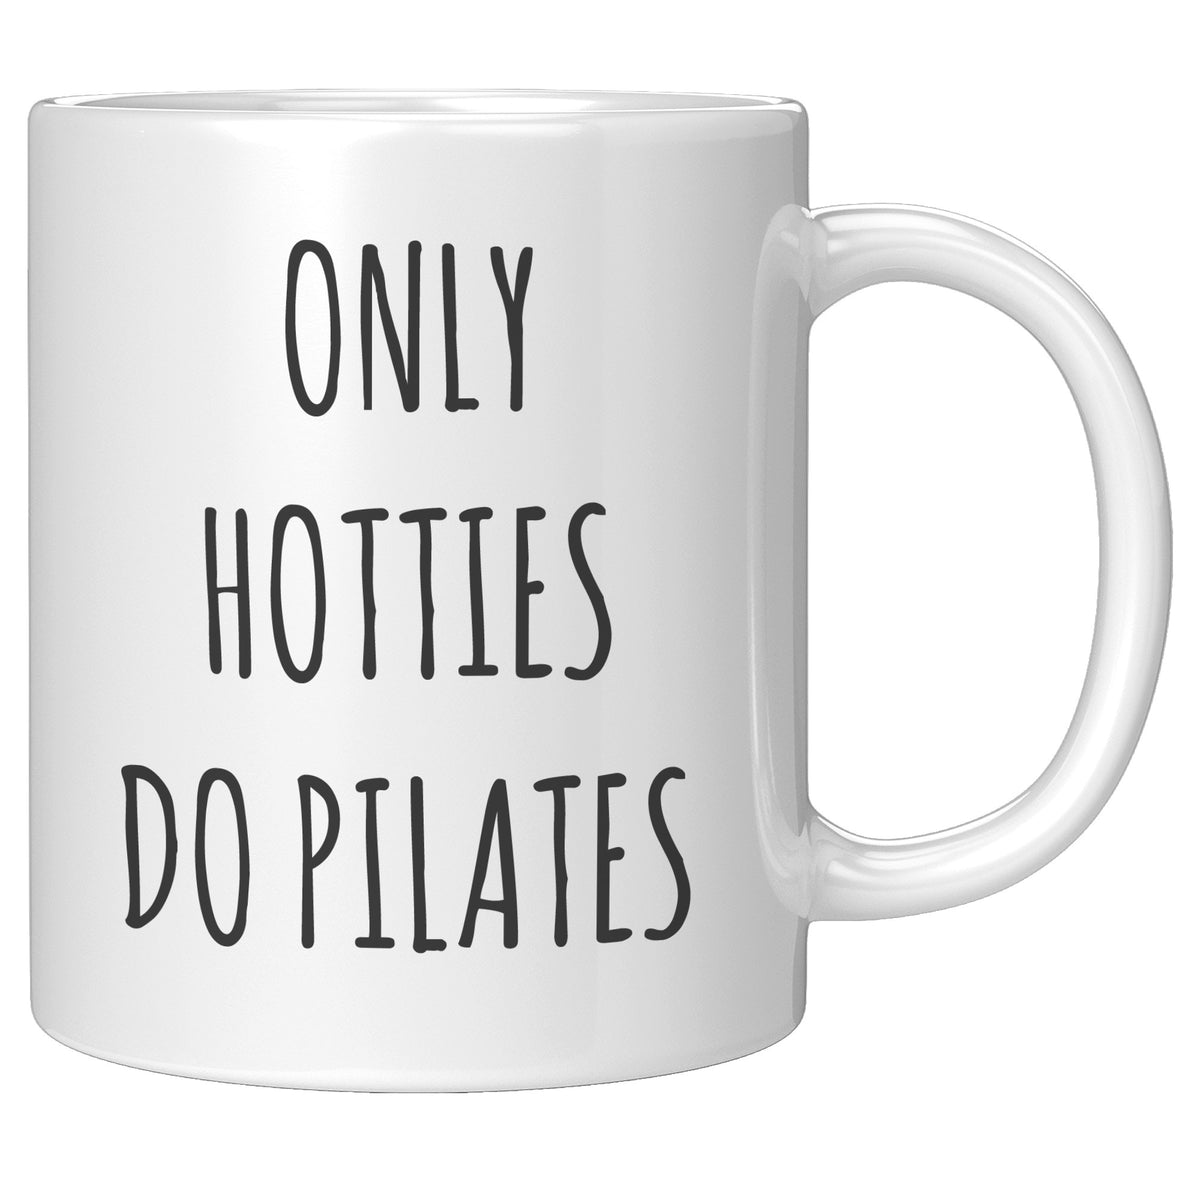 Pilates Mug - Only Hotties Do Pilates